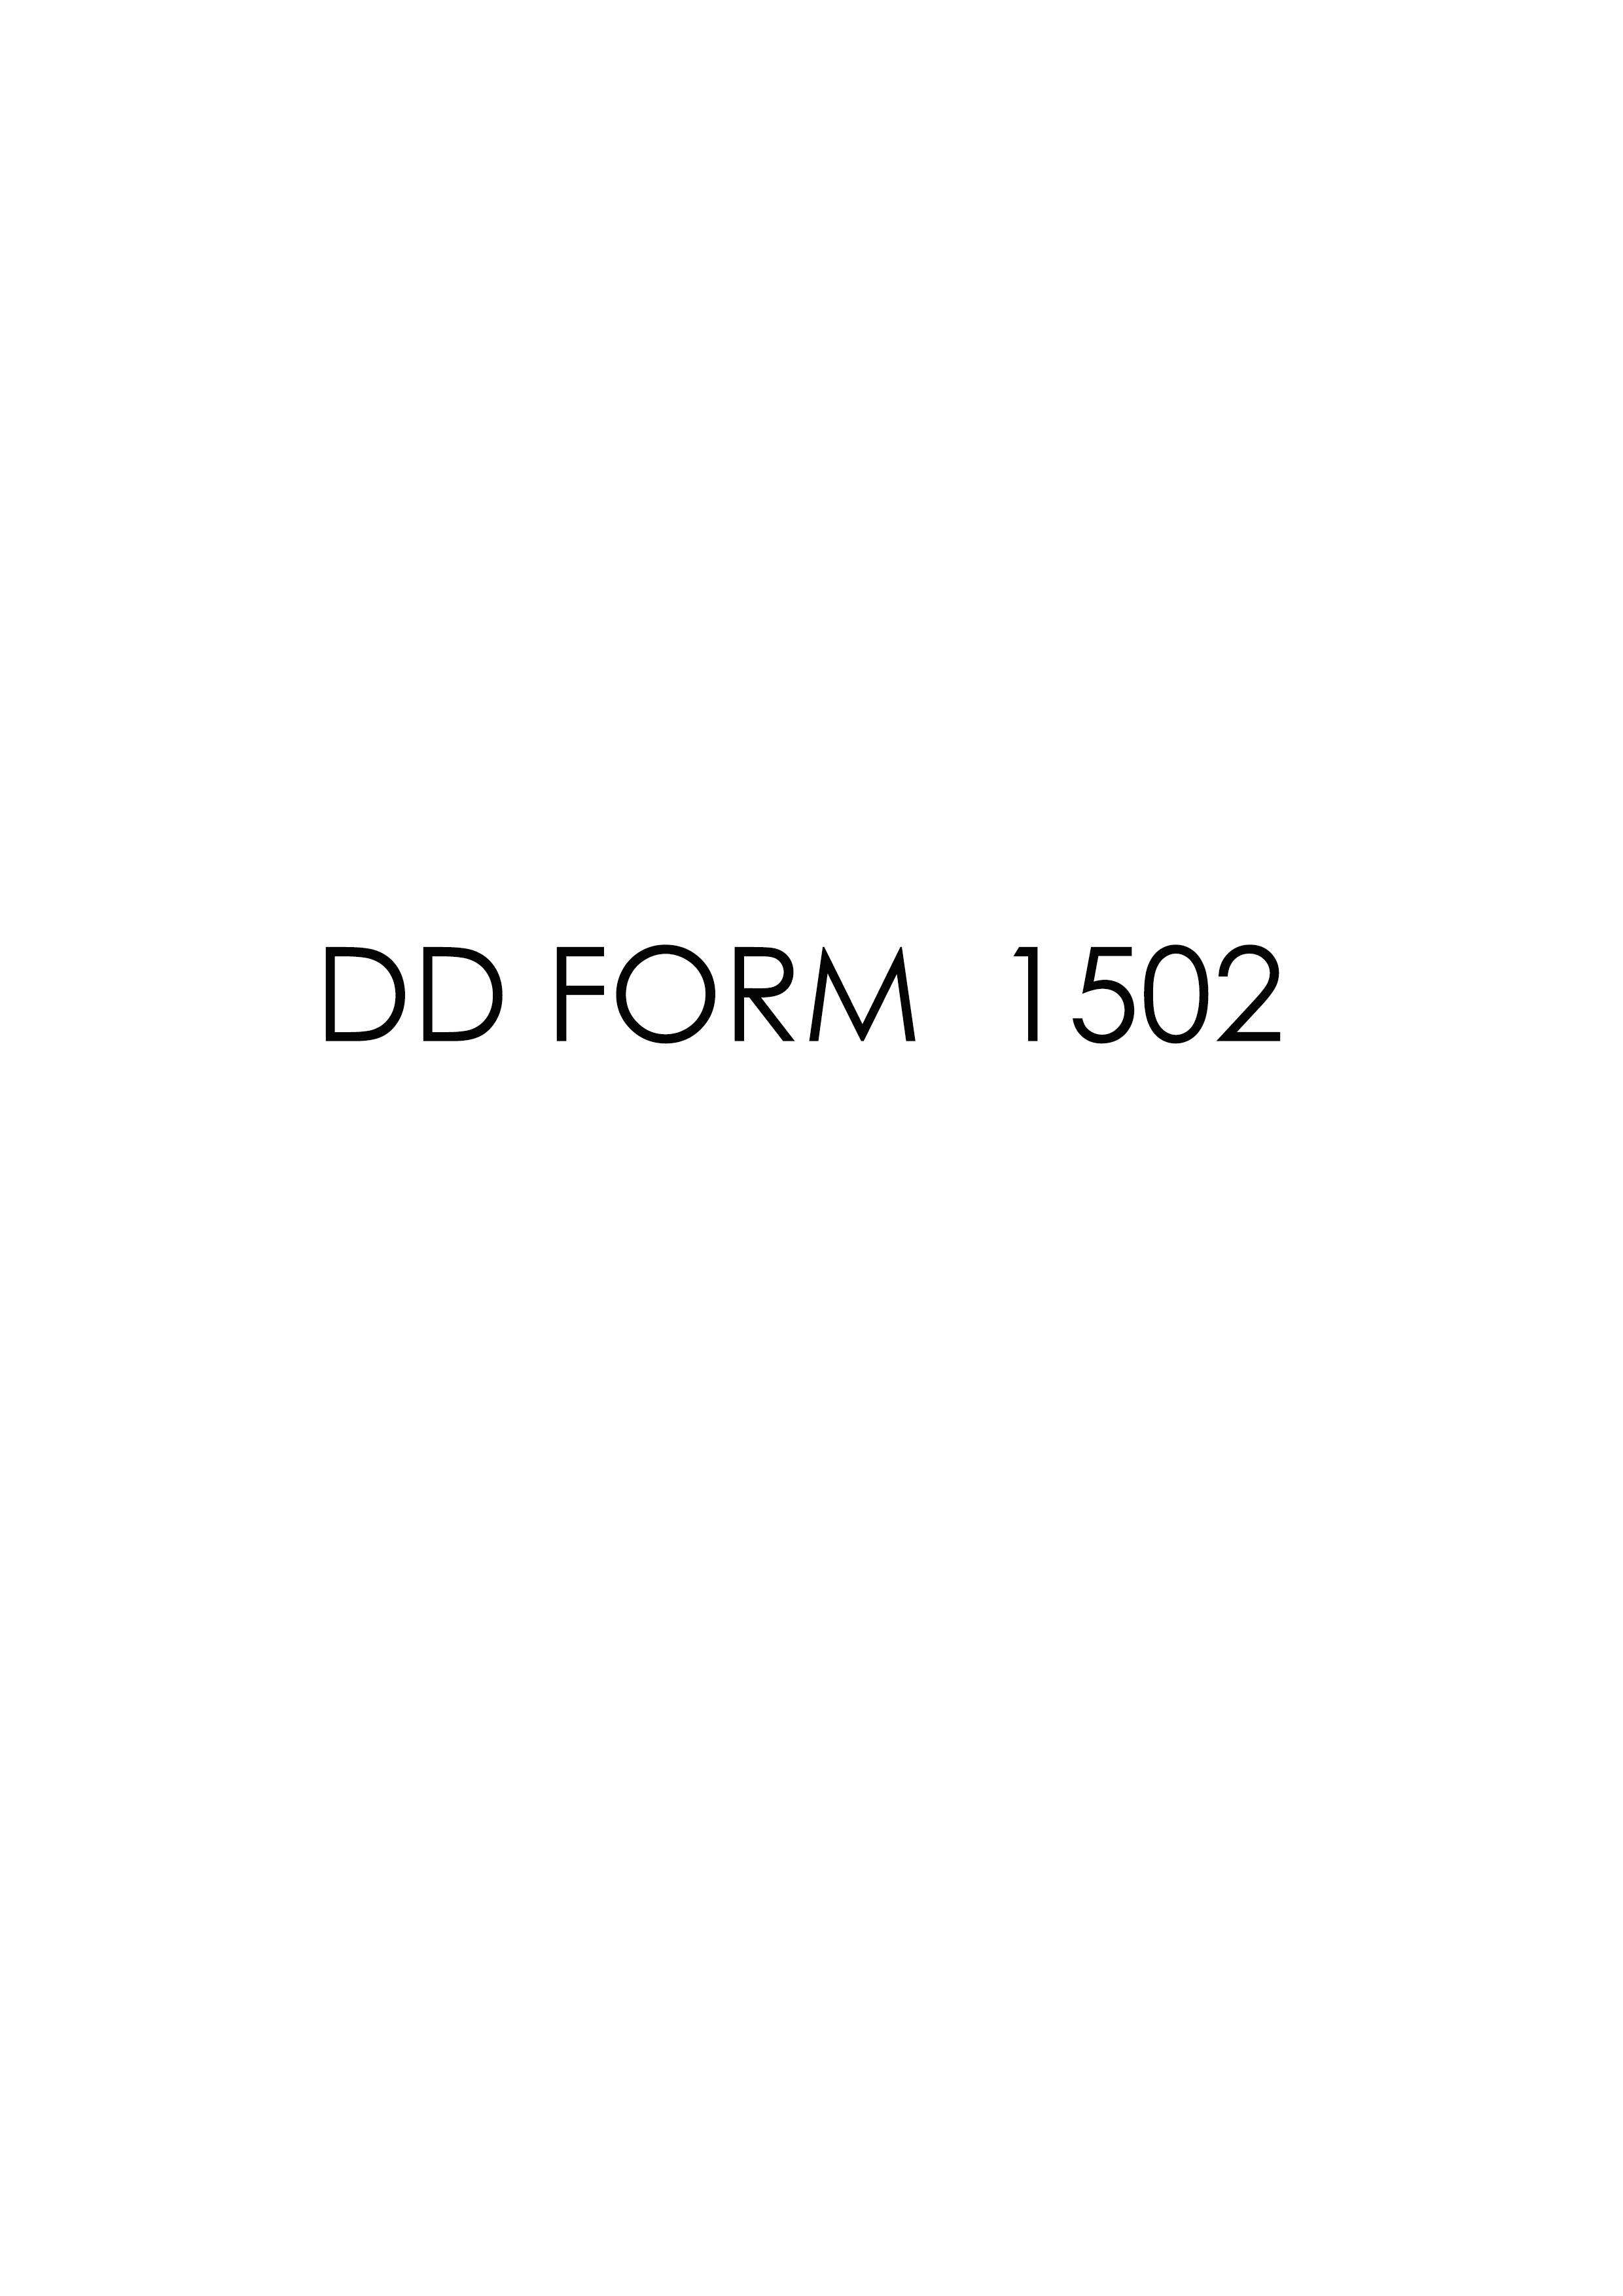 Download dd form 1502